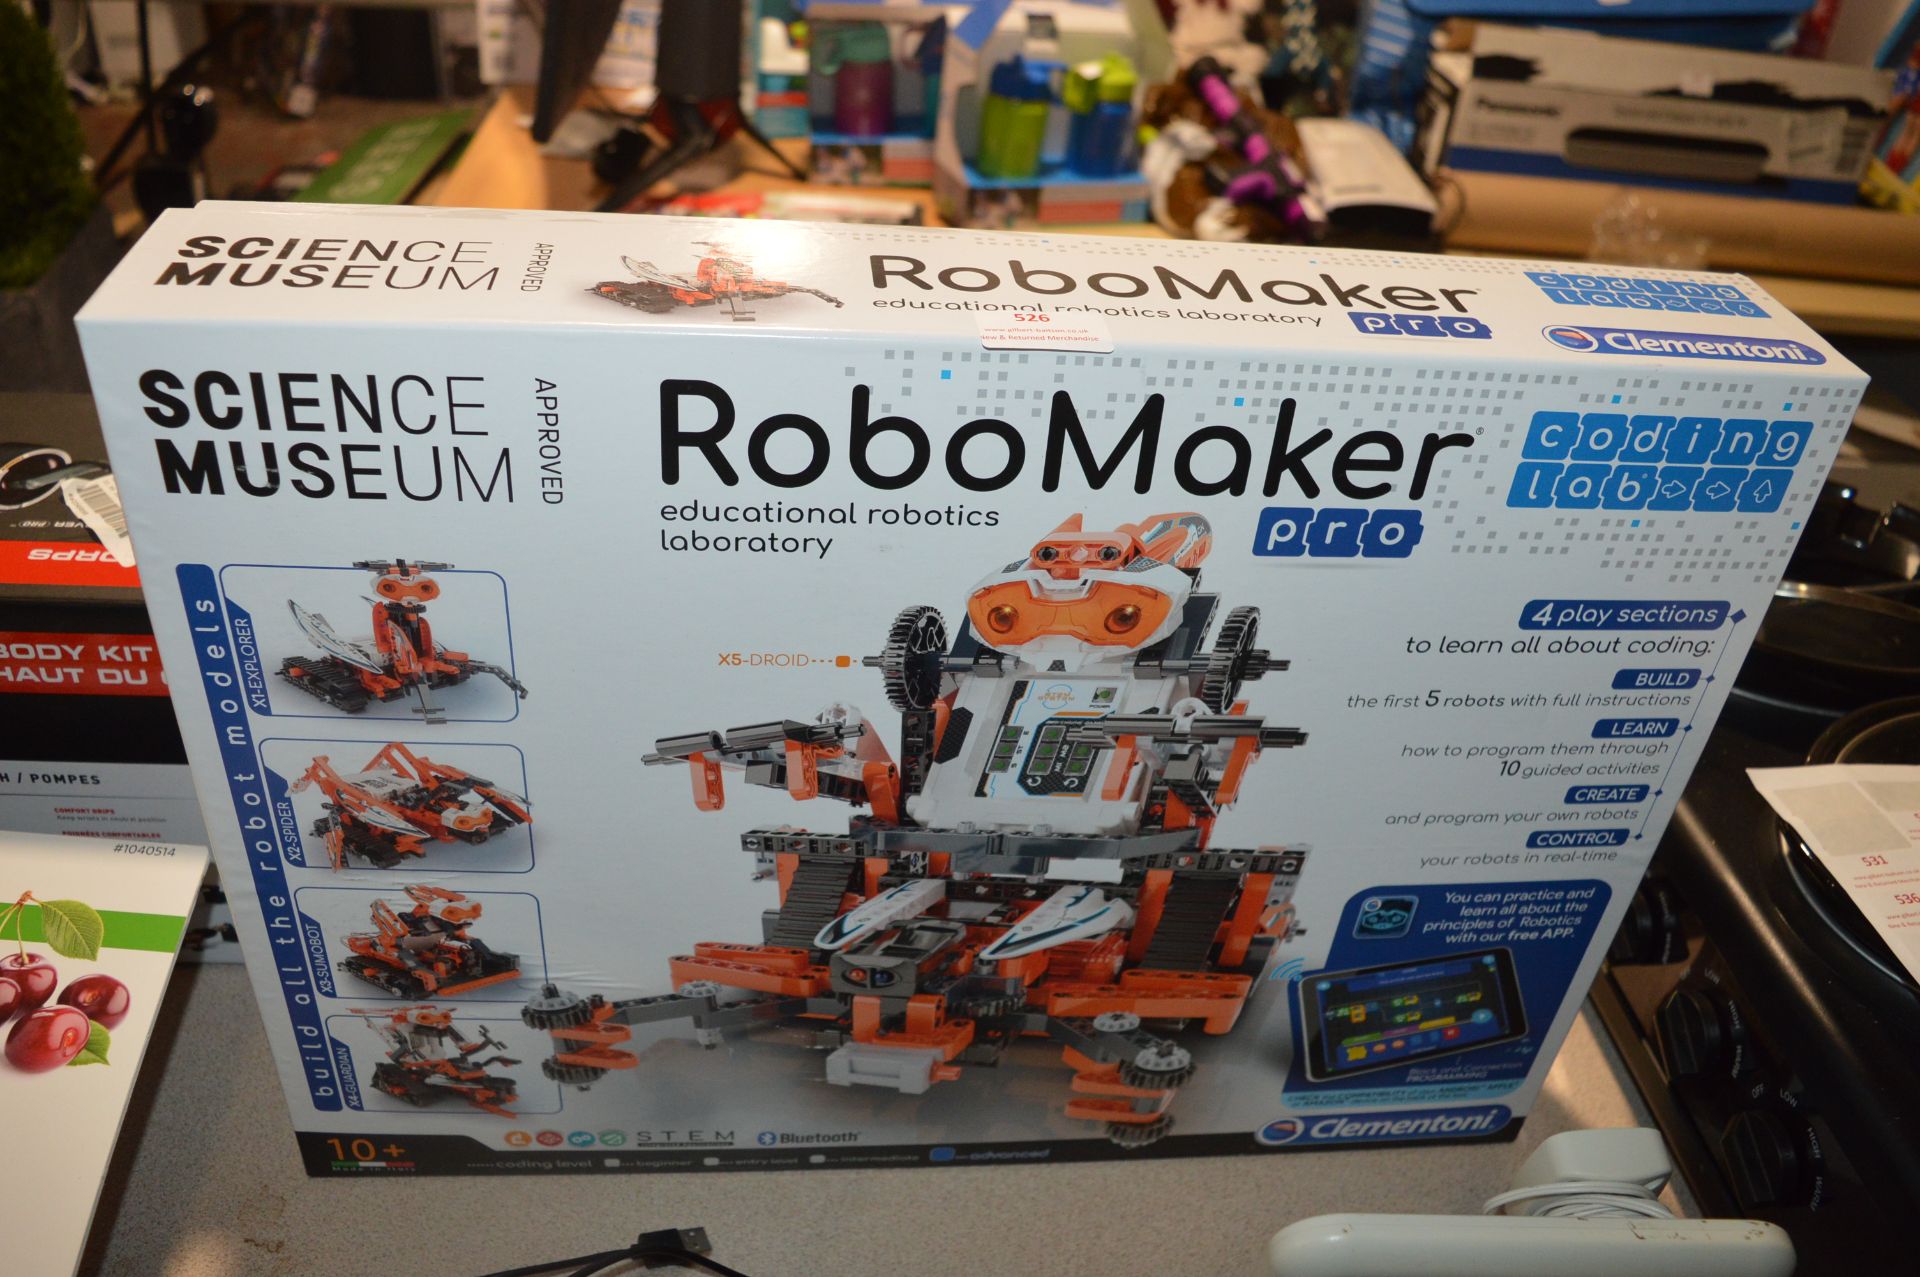 *Robomaker Educational Robot Laboratory